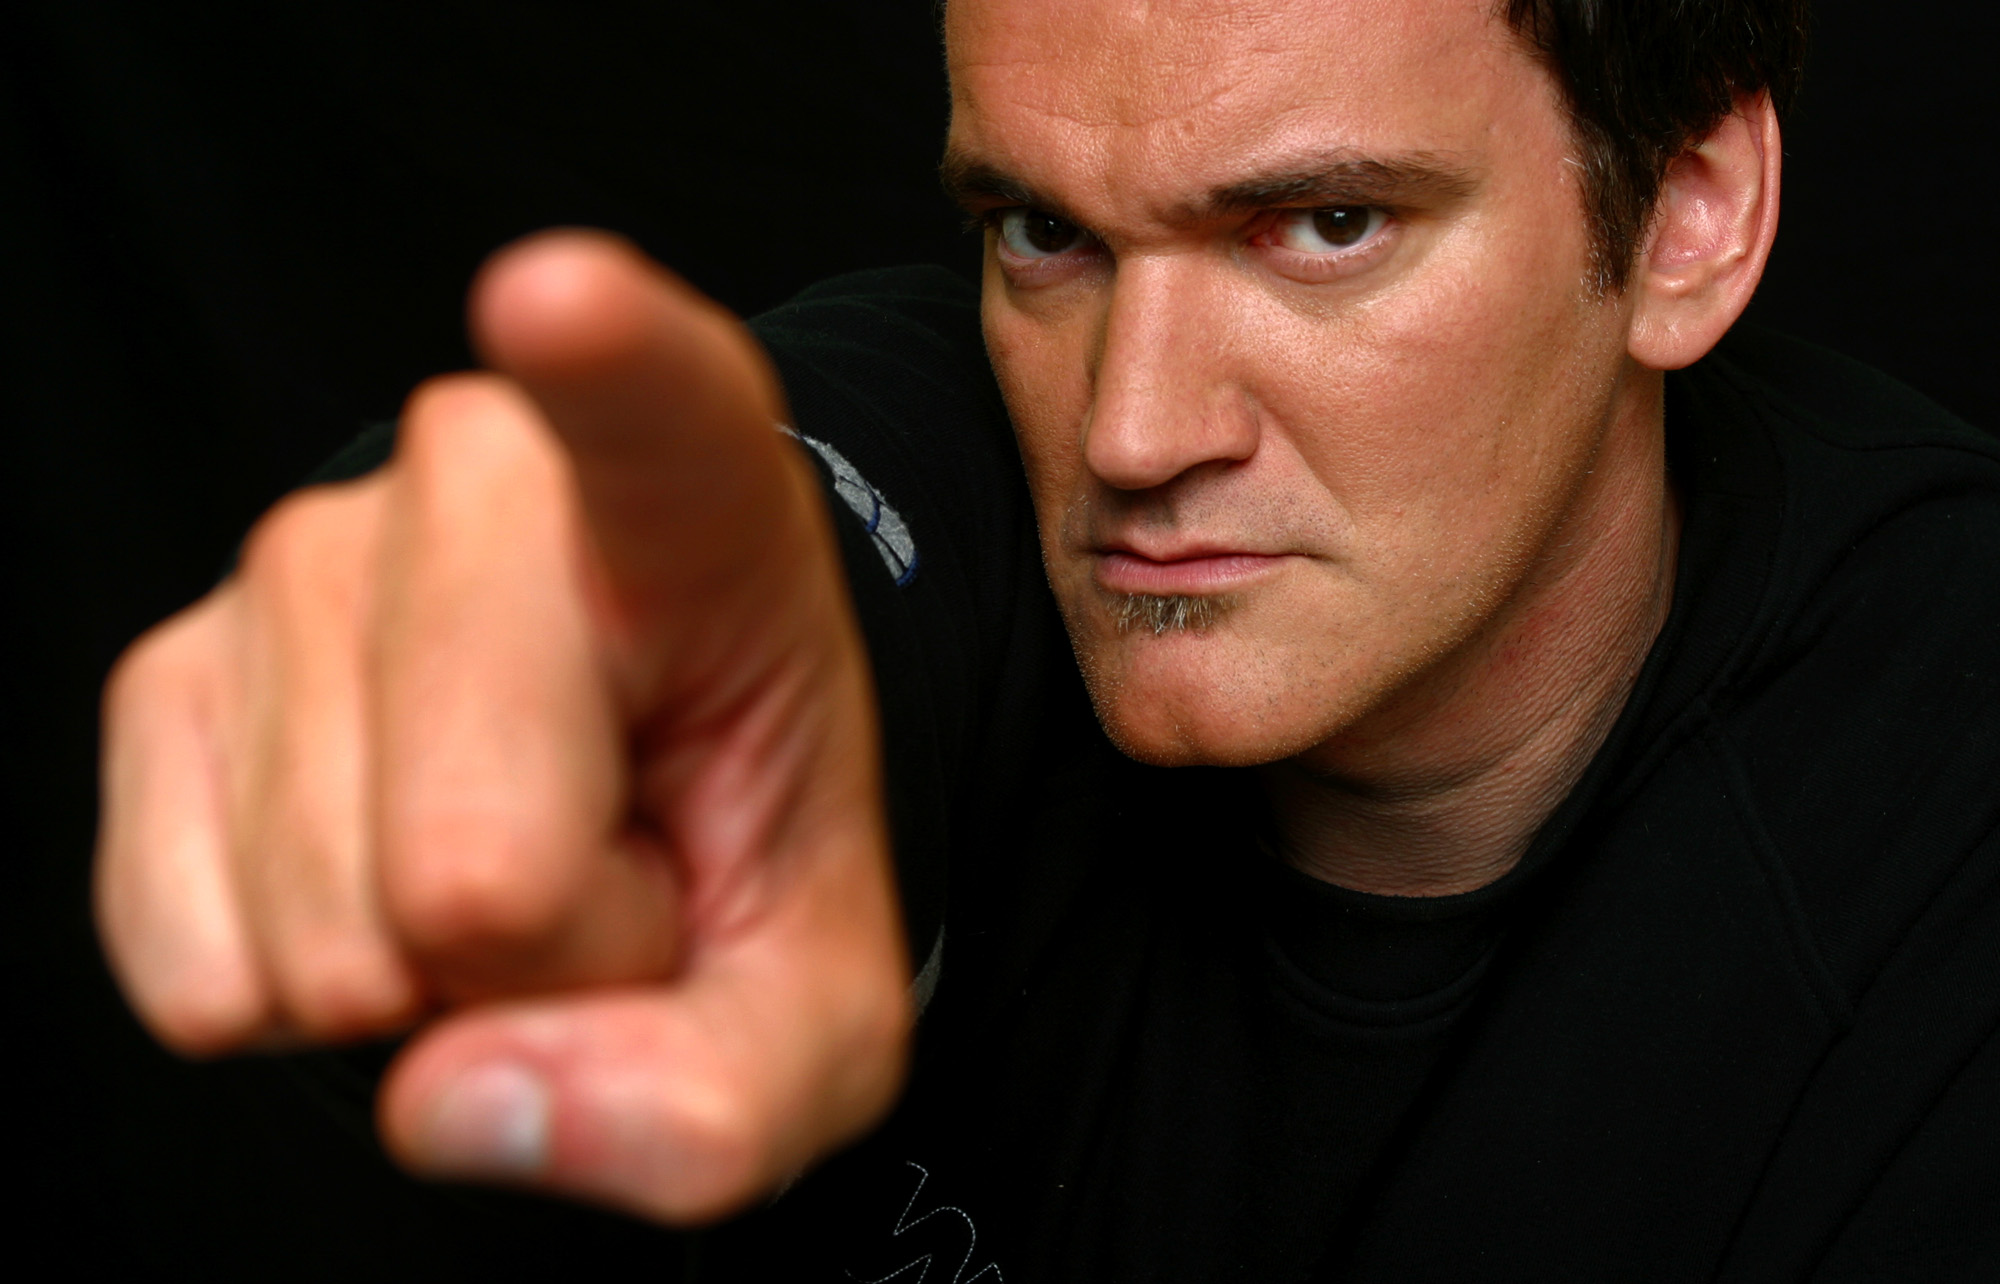     $1     Tarantino